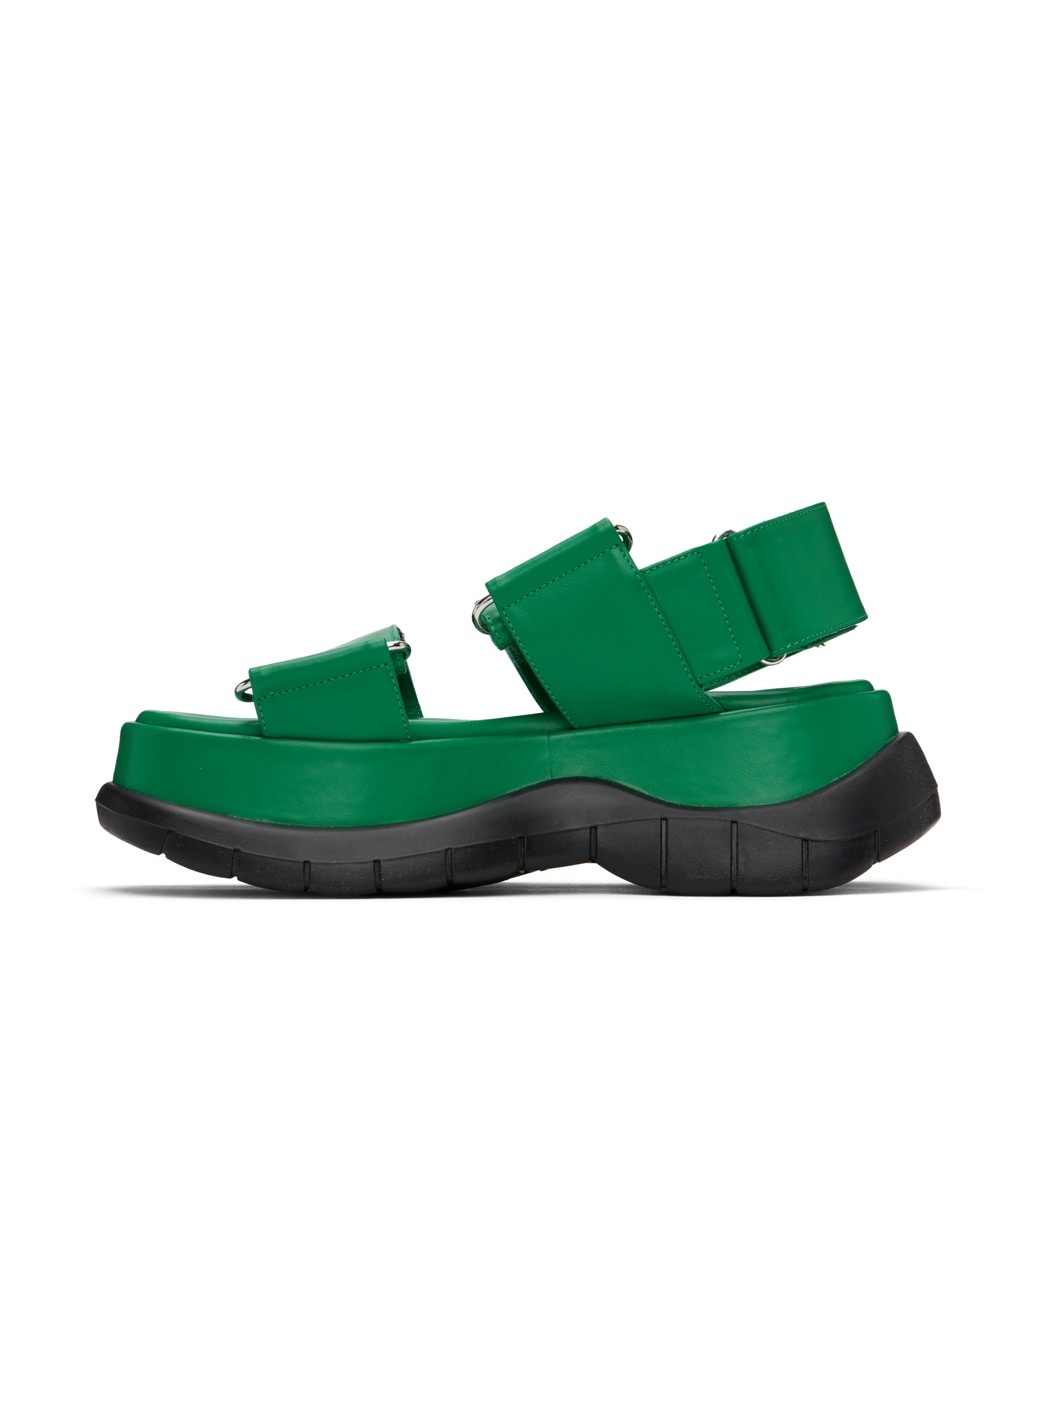 SSENSE Exclusive Green Platform Sandals - 3